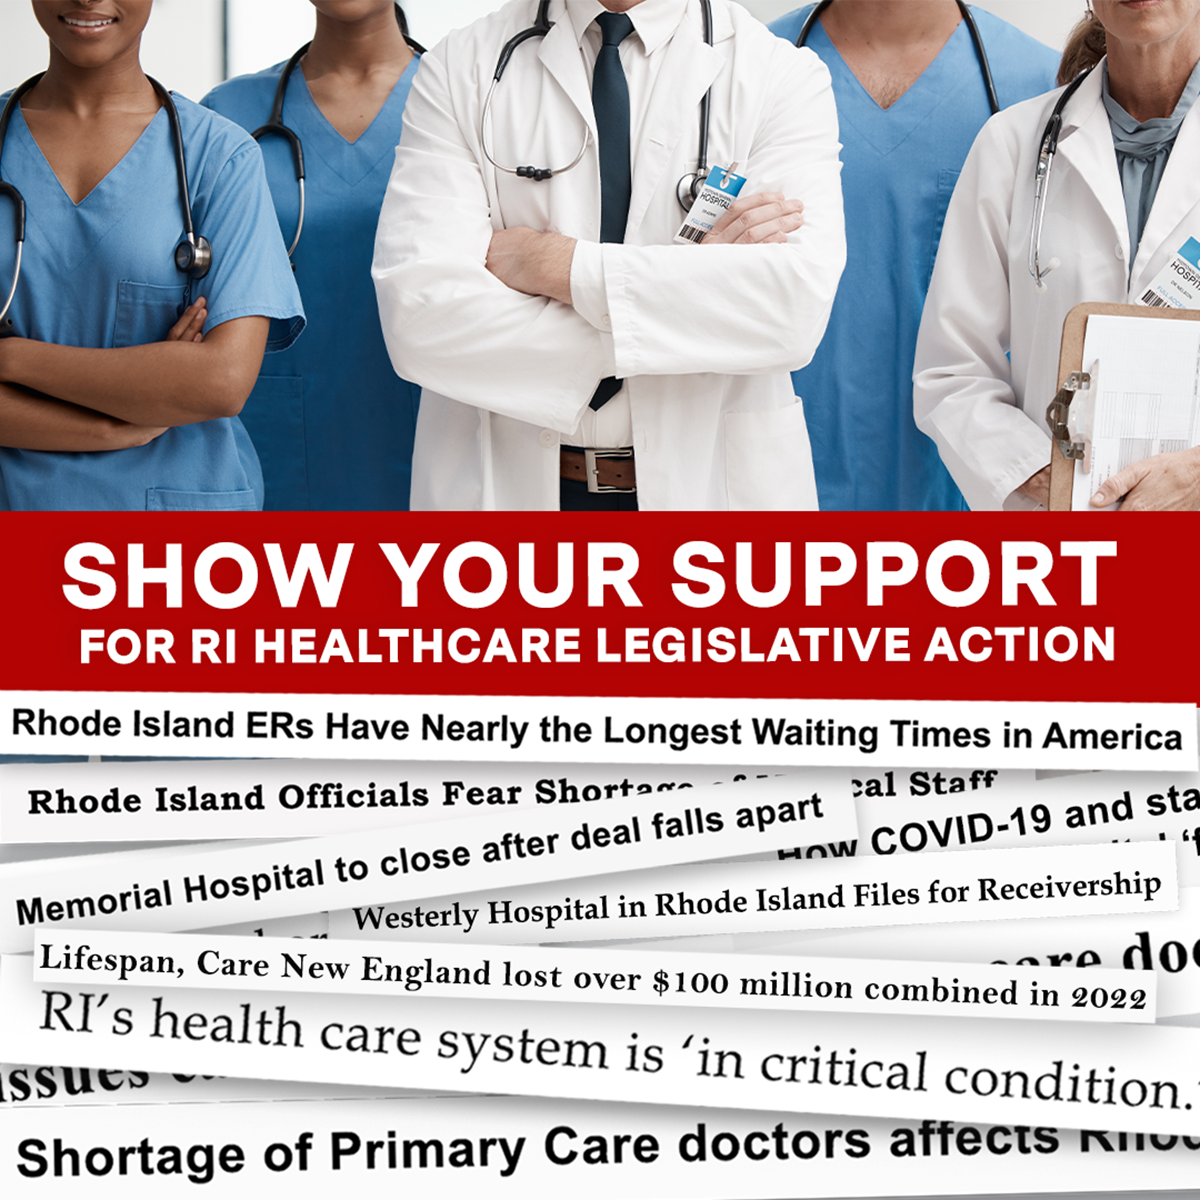 Call for Support of RI Healthcare Legislation